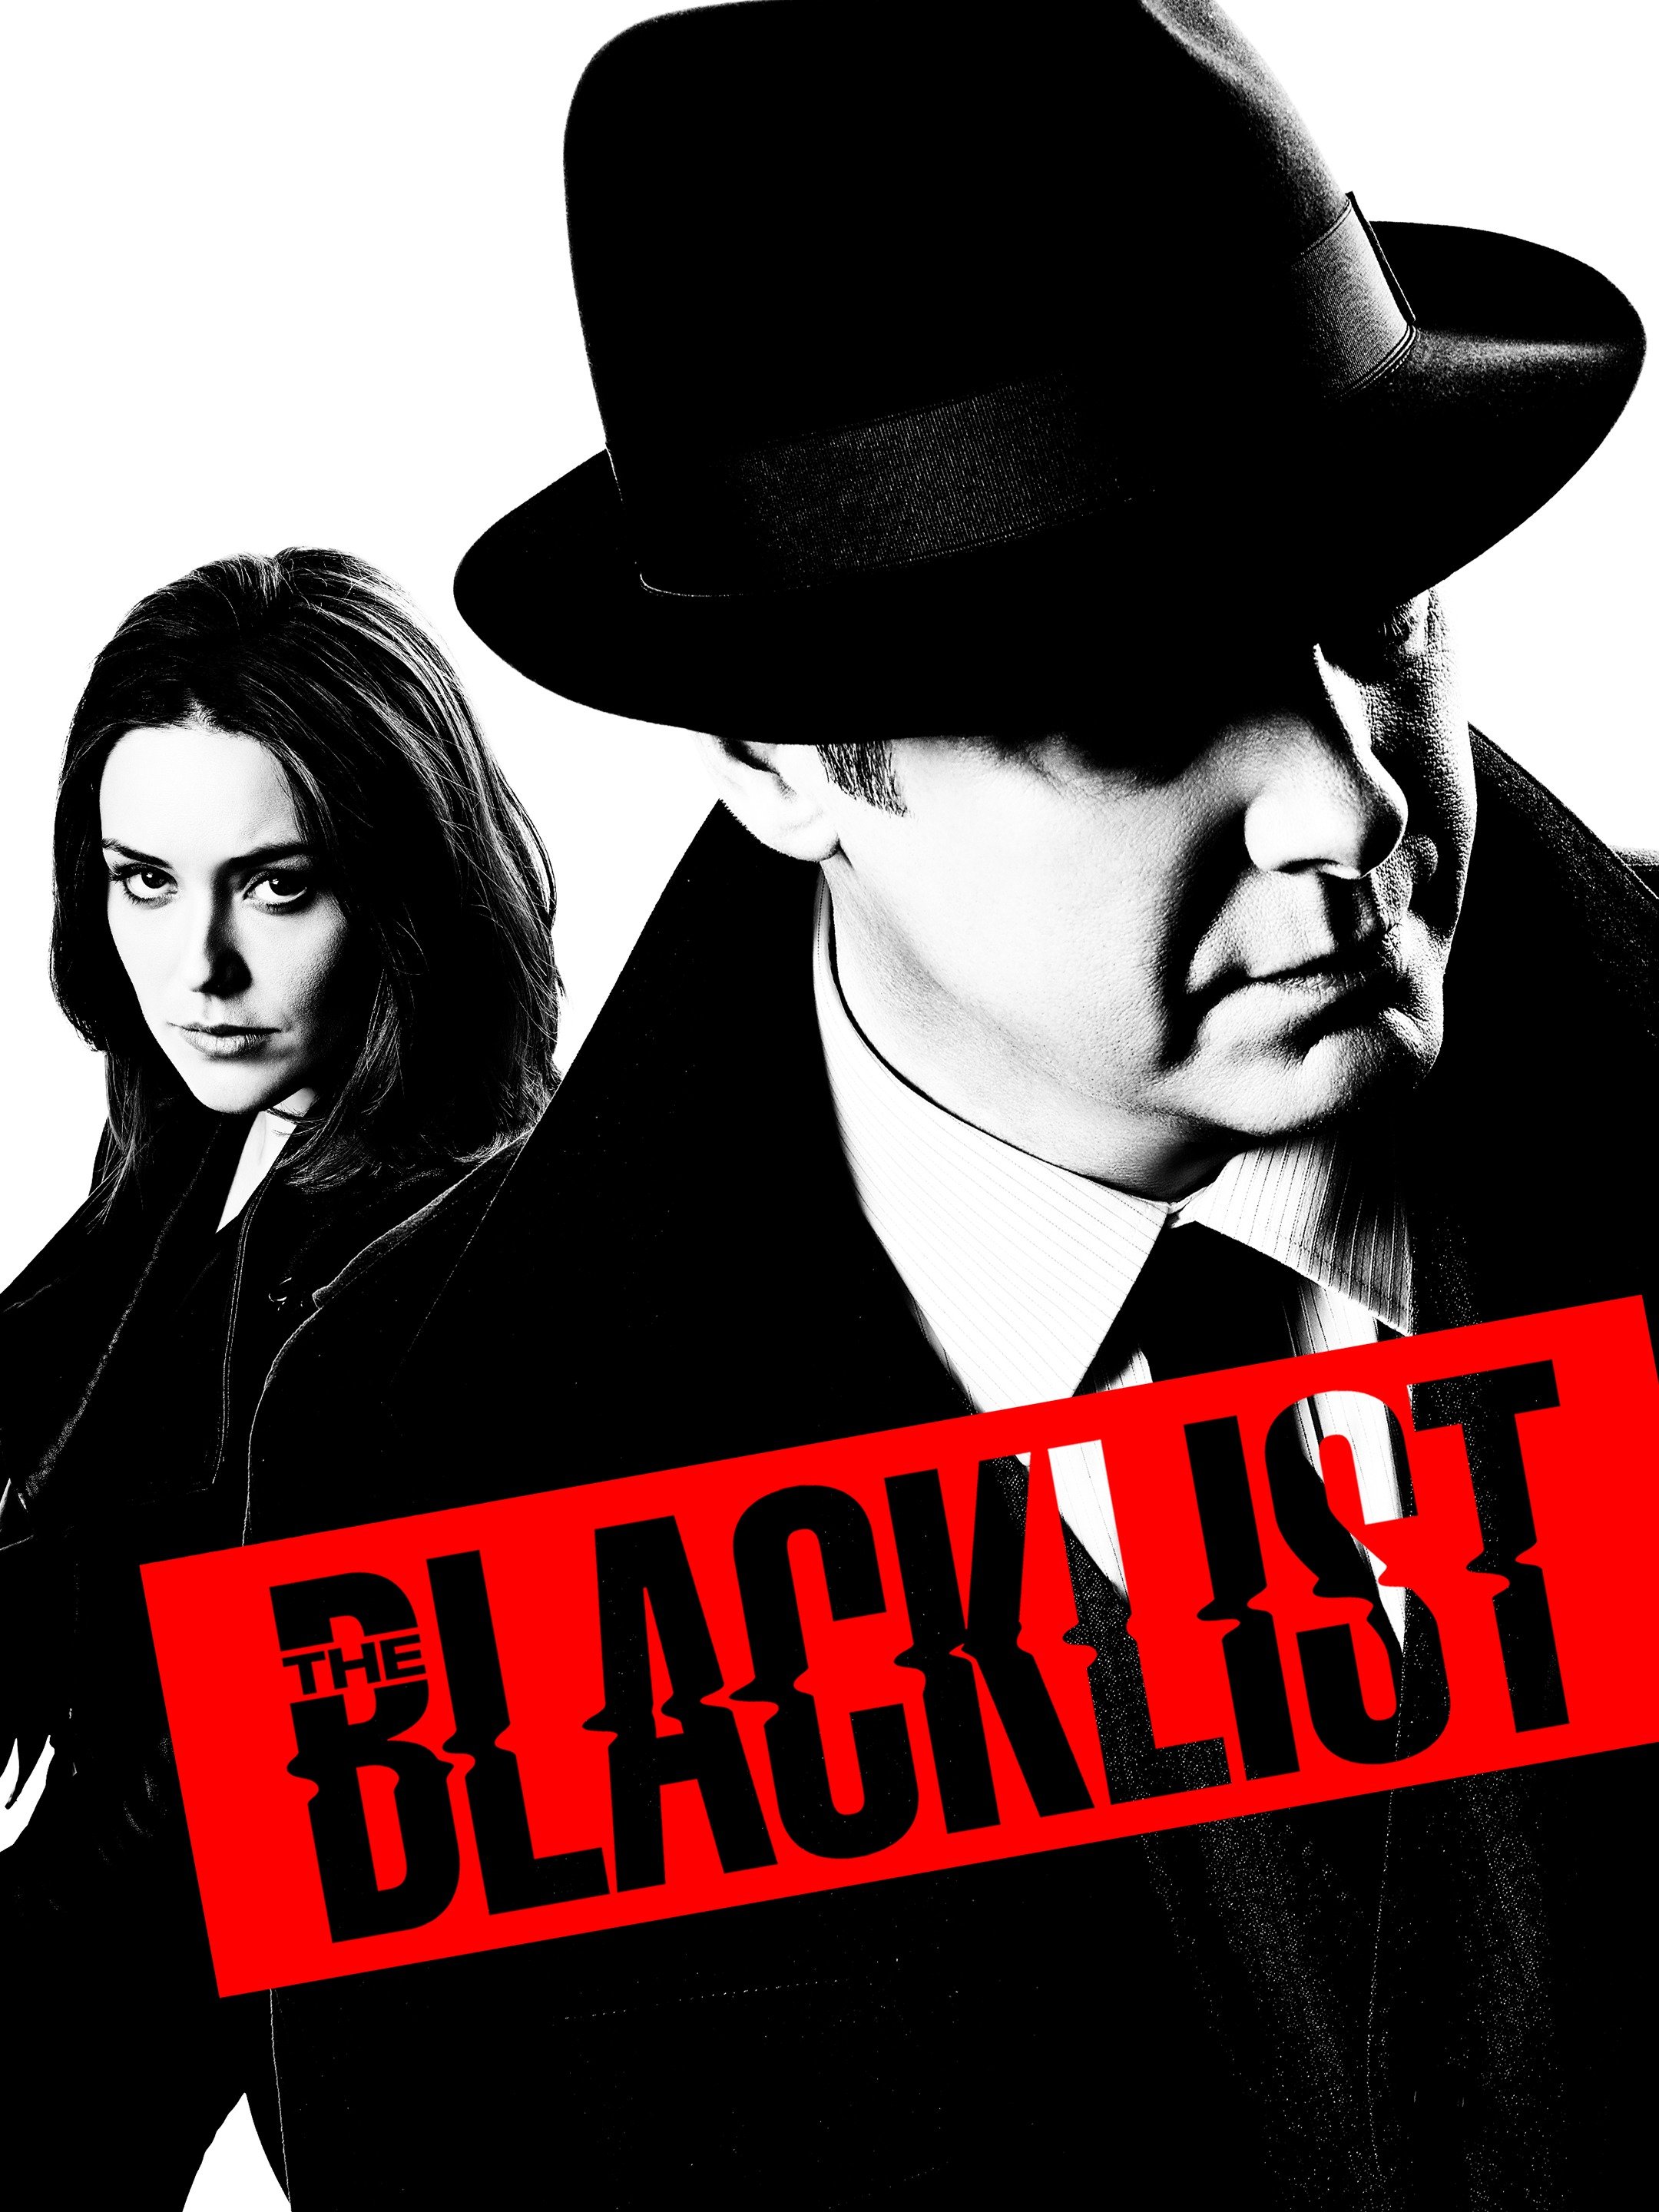 the blacklist season 3 episode 4 cast